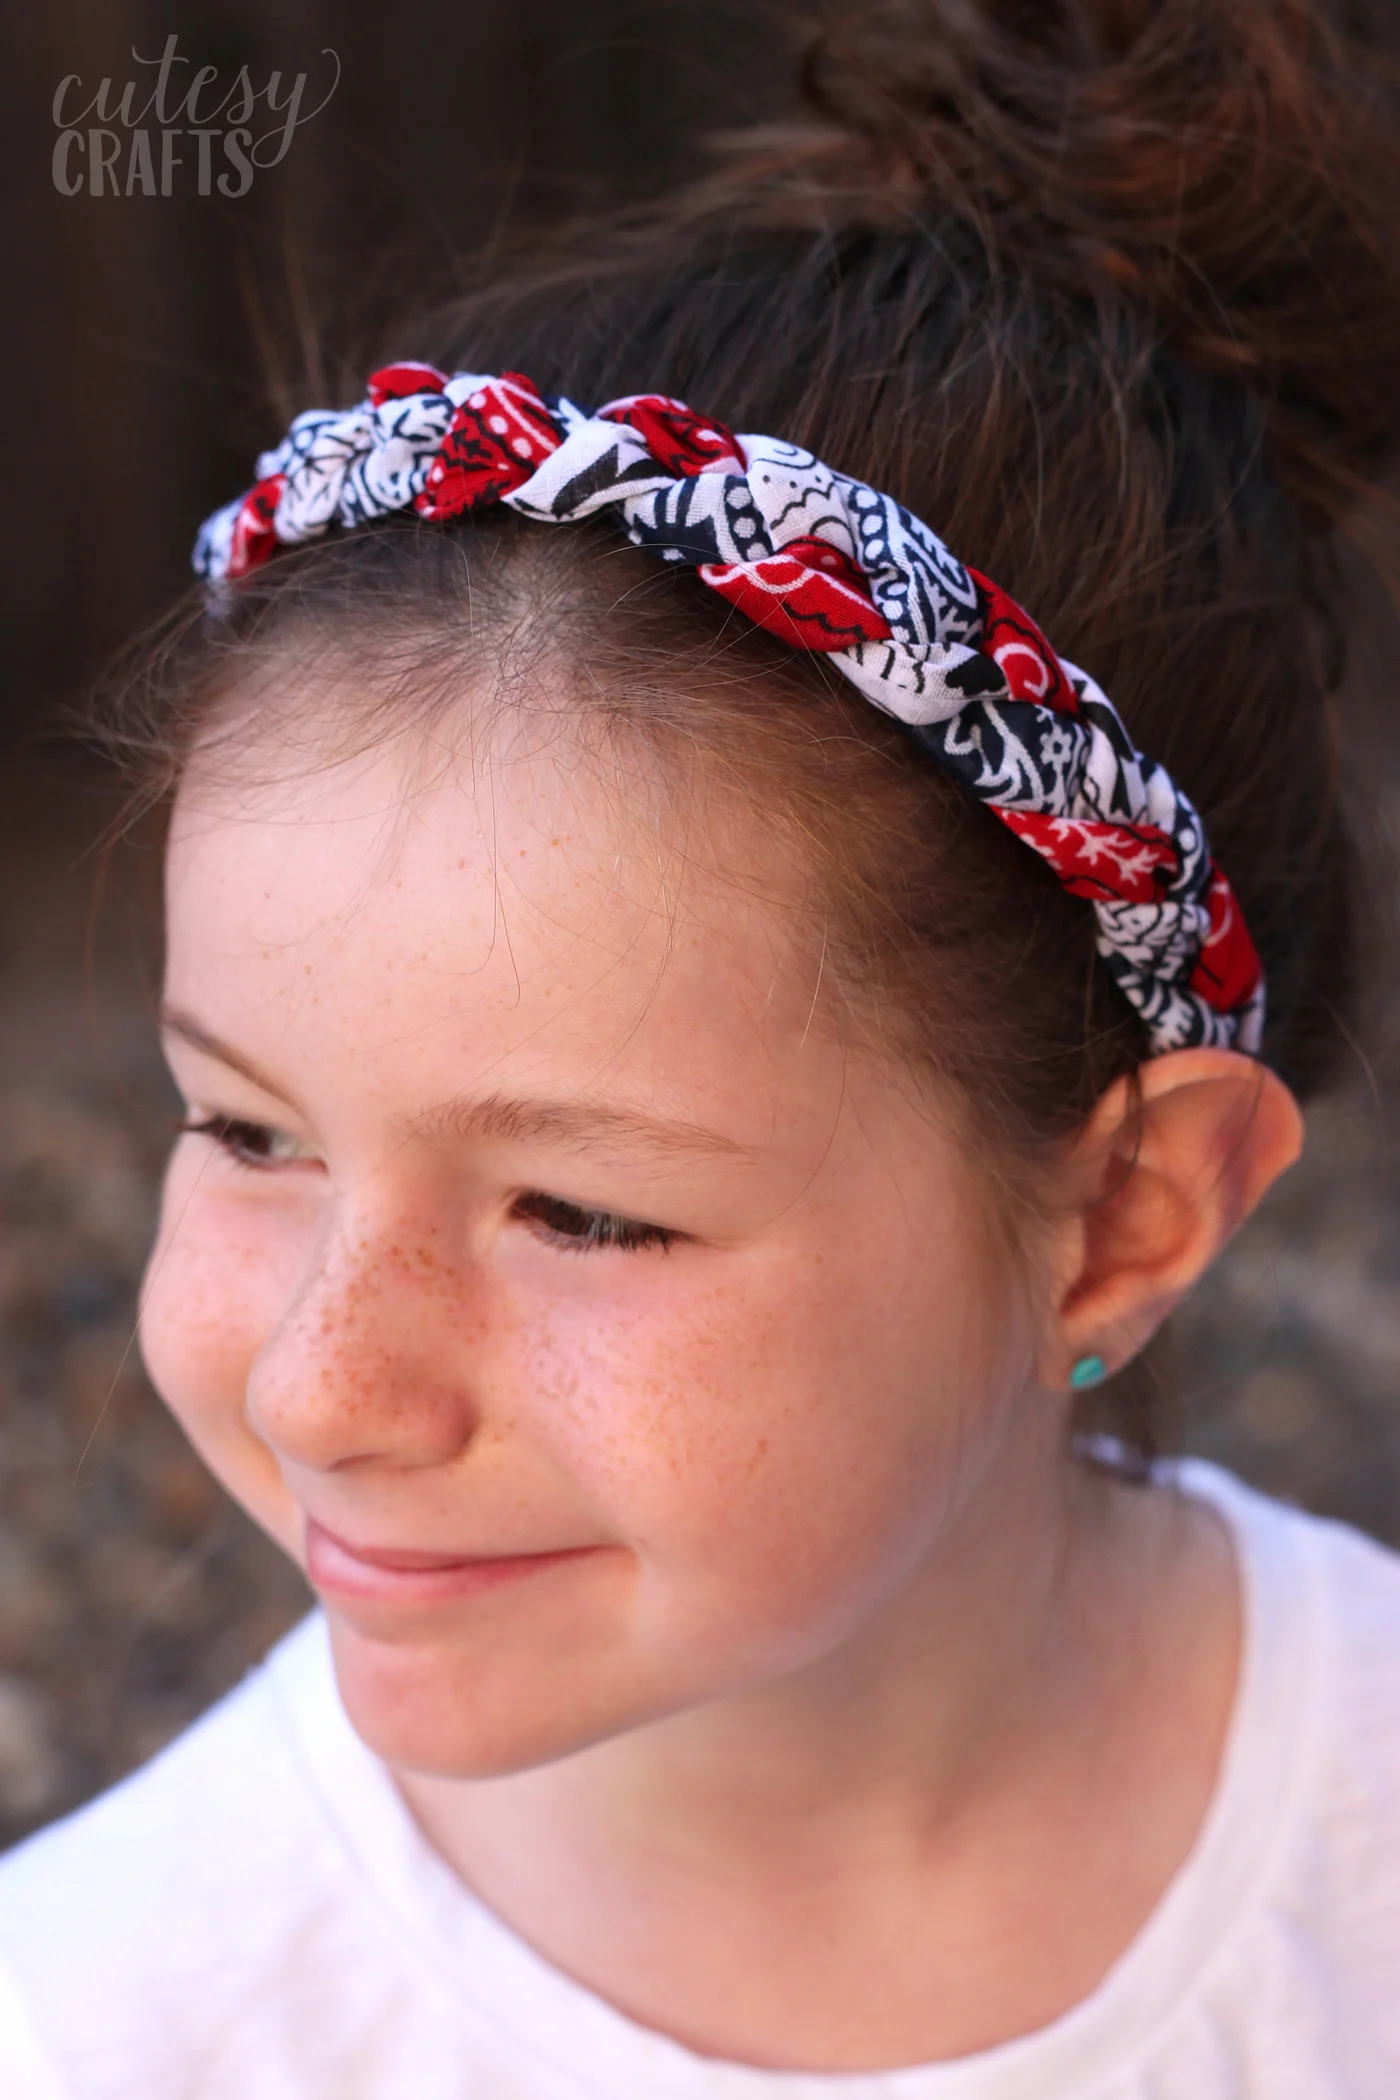 Learn how to make a bandana headband